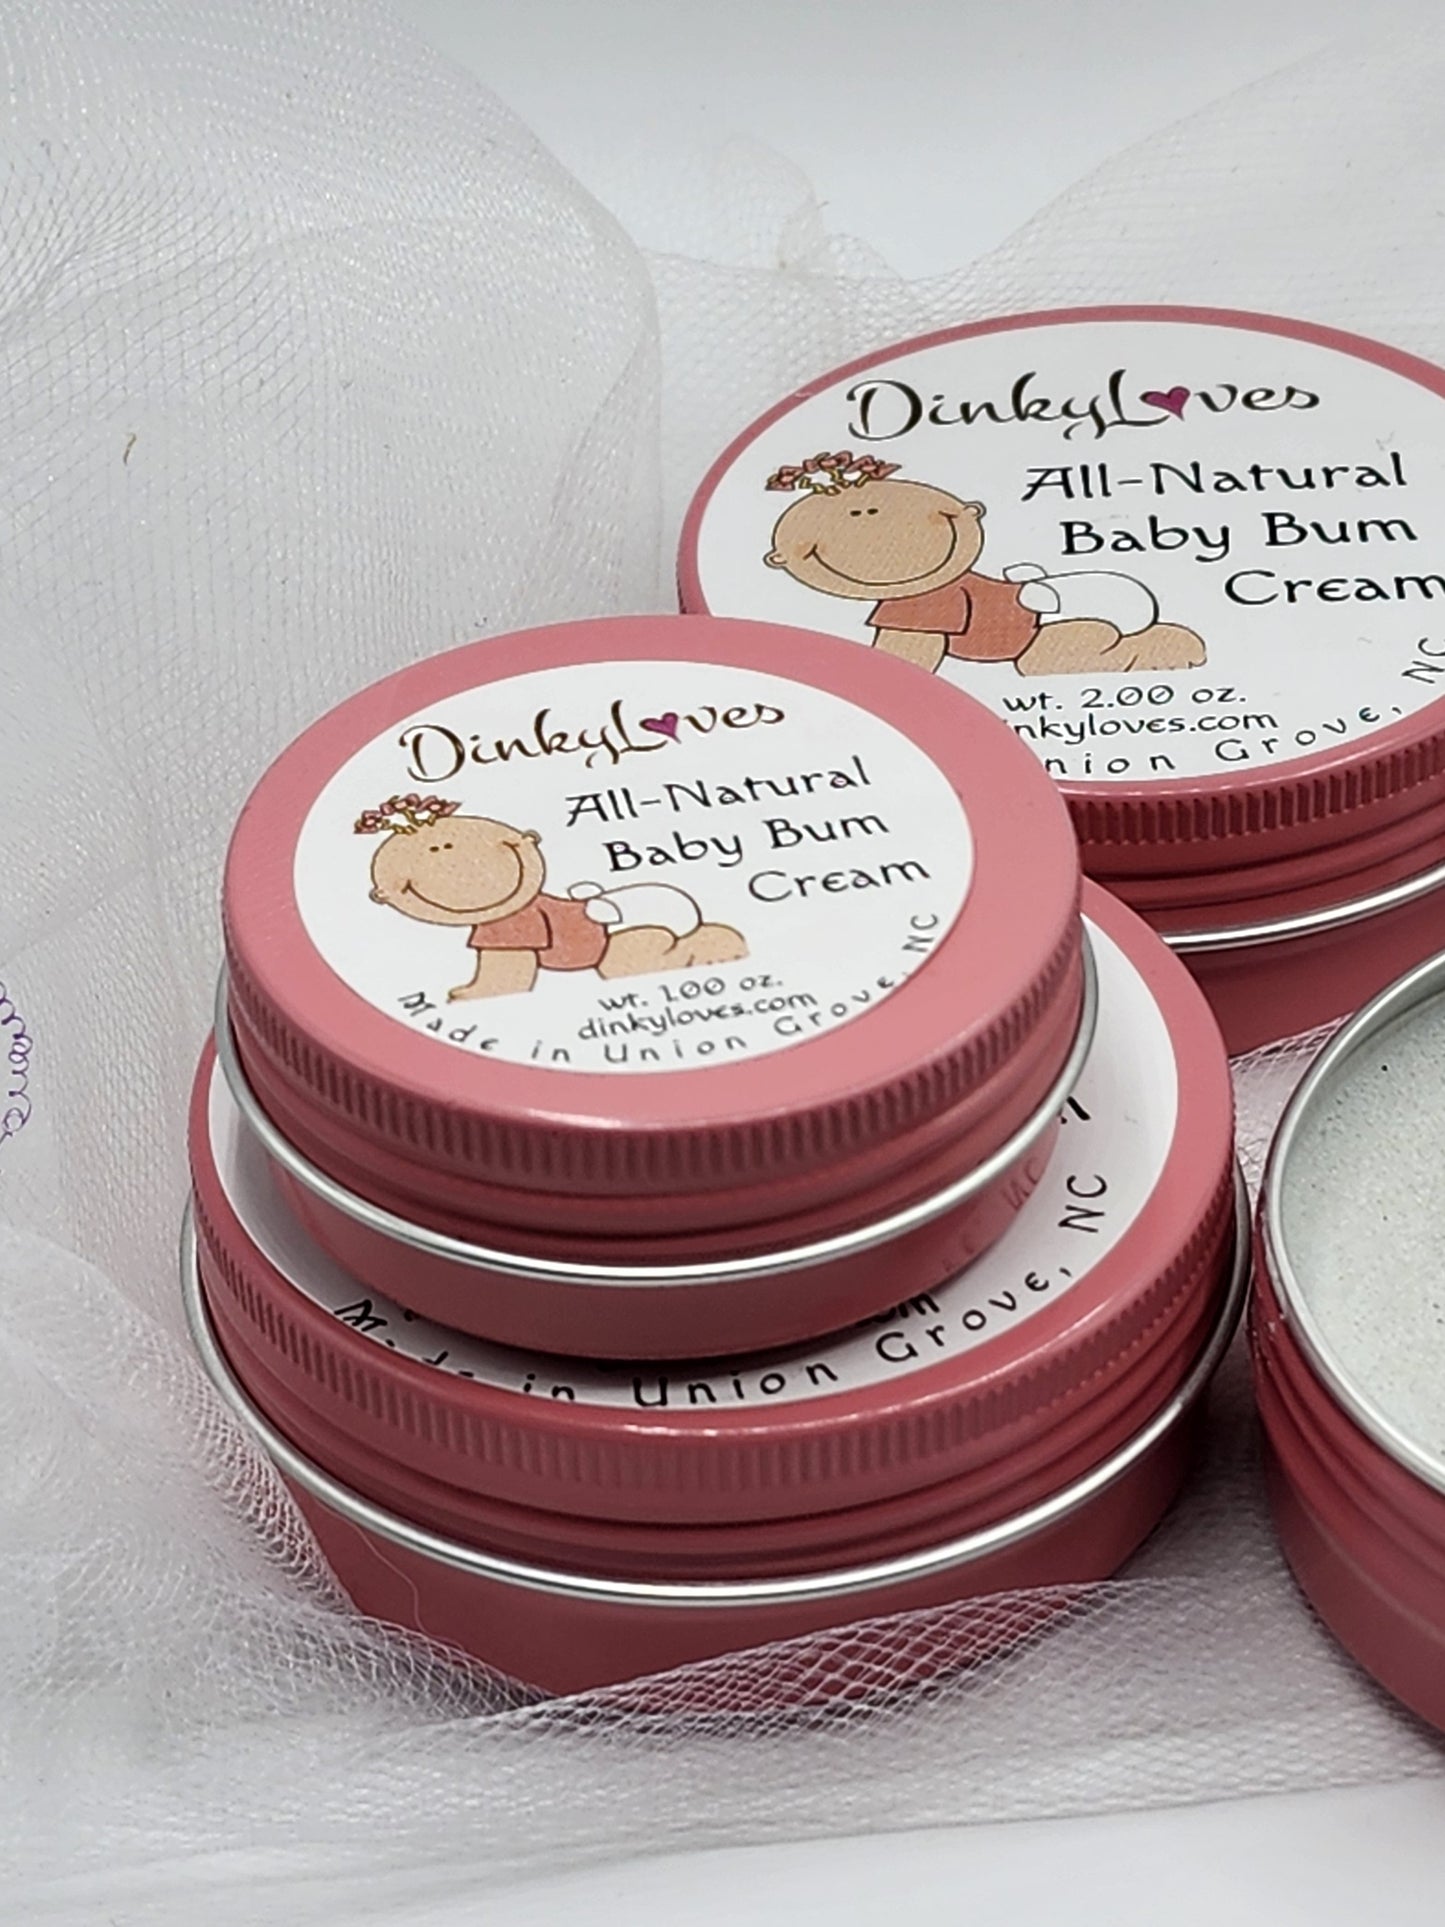 BABY BUM CREAM - All Natural - Baby Bum Cream